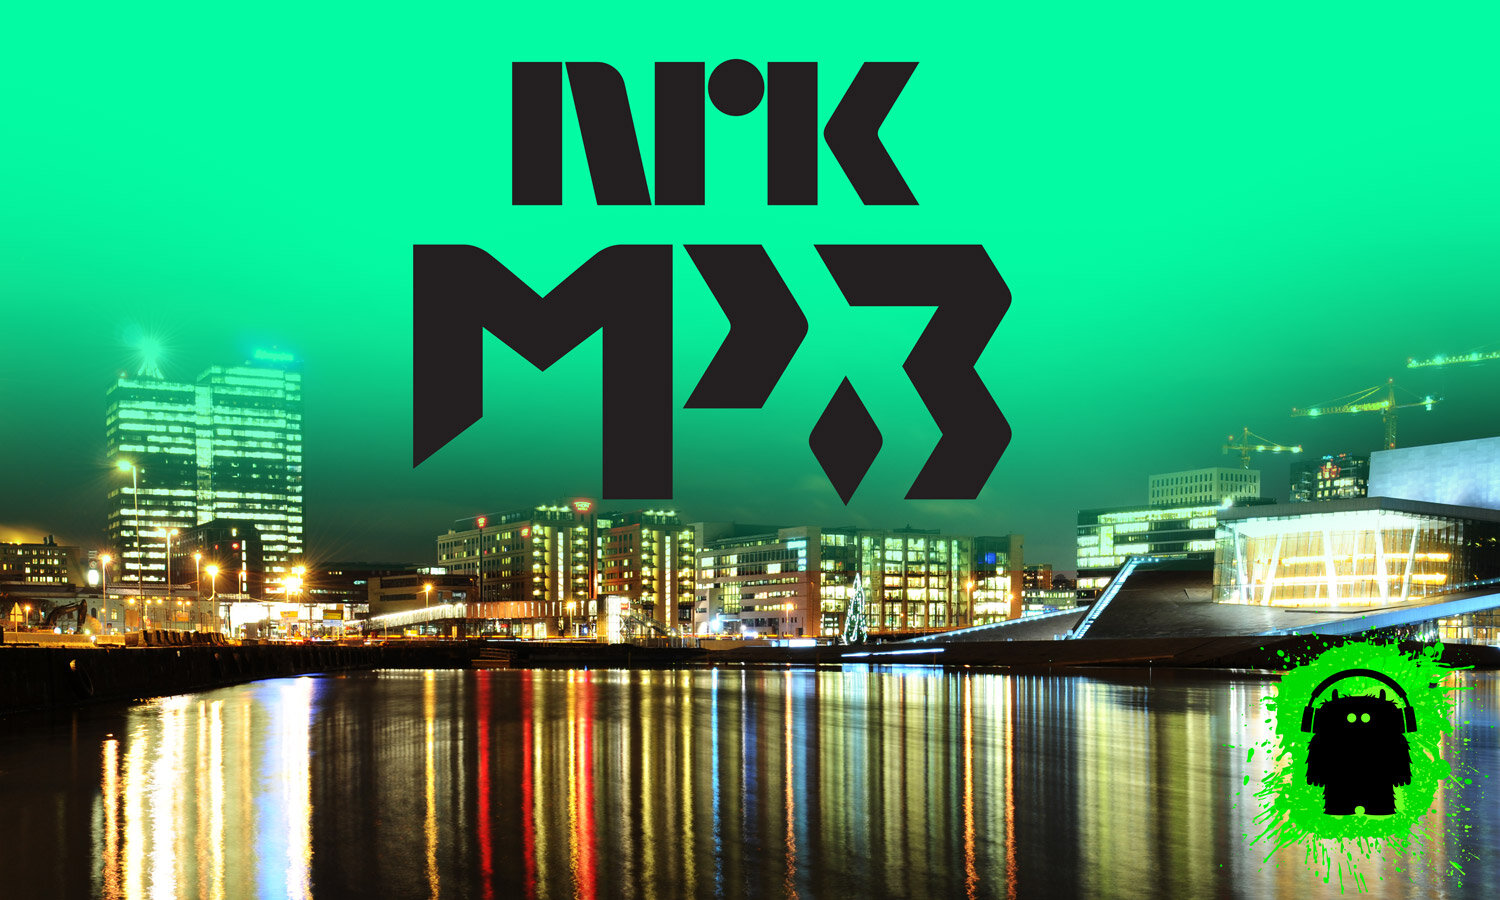 NRK-Graphic-1500x900-IDEA.jpg